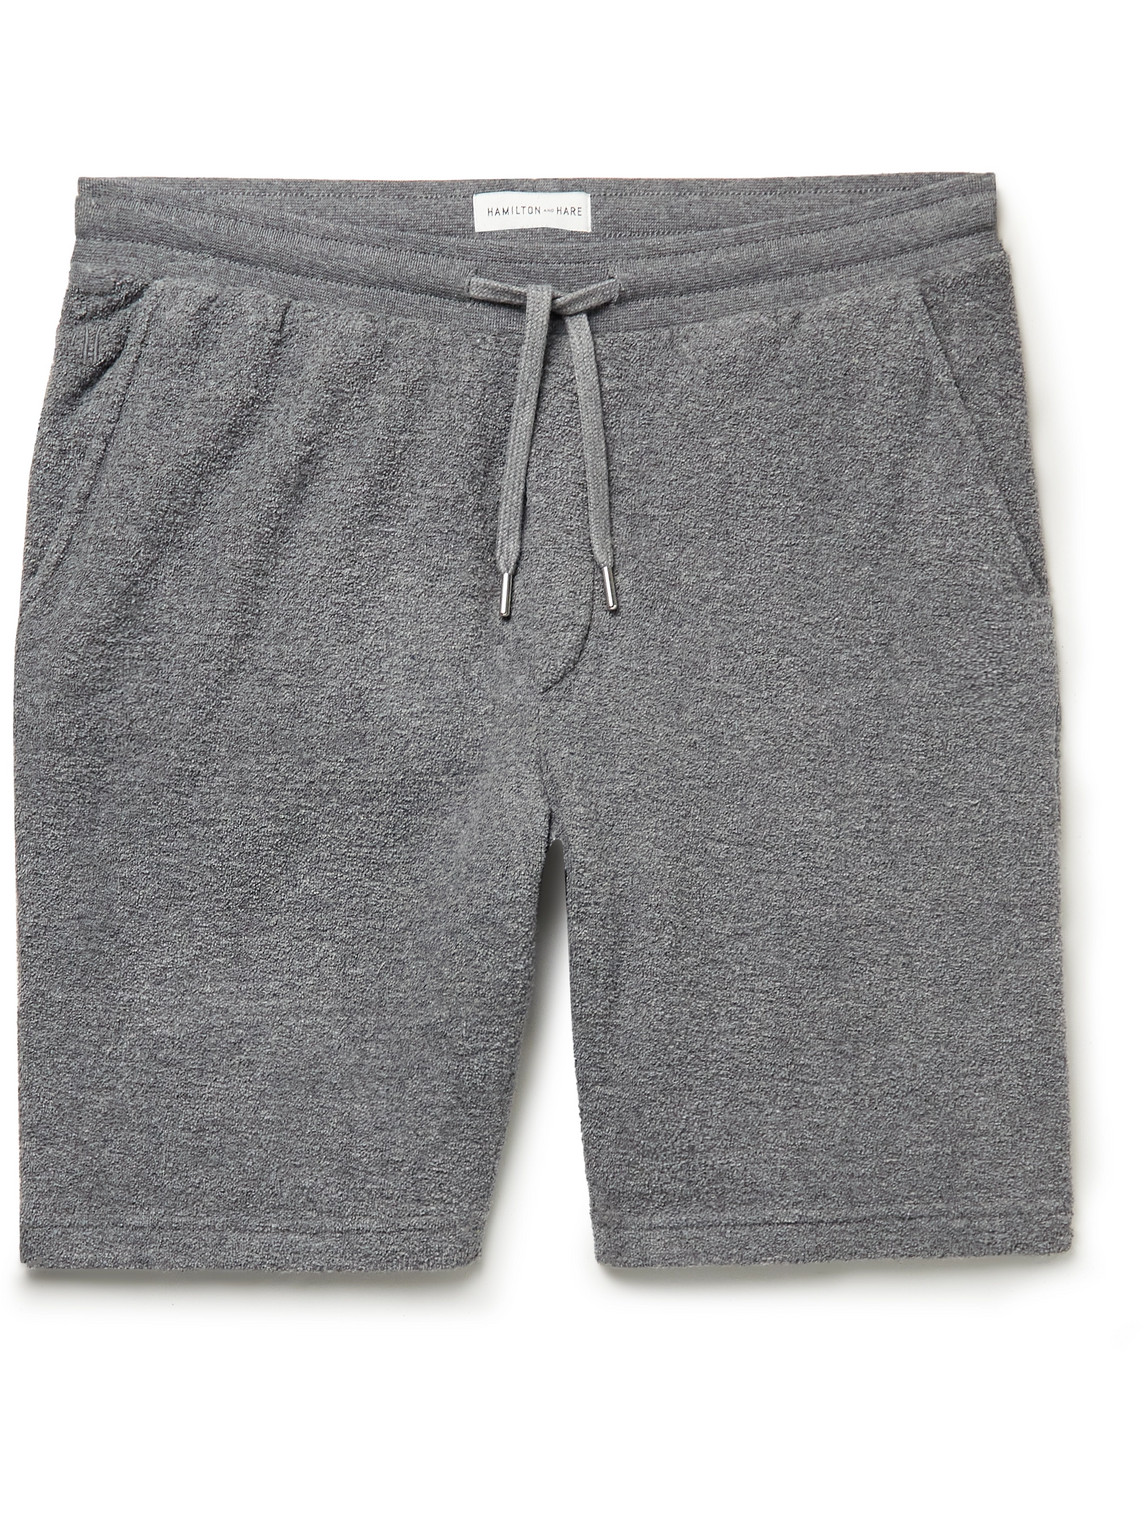 Hamilton And Hare Cotton-terry Drawstring Shorts In Gray